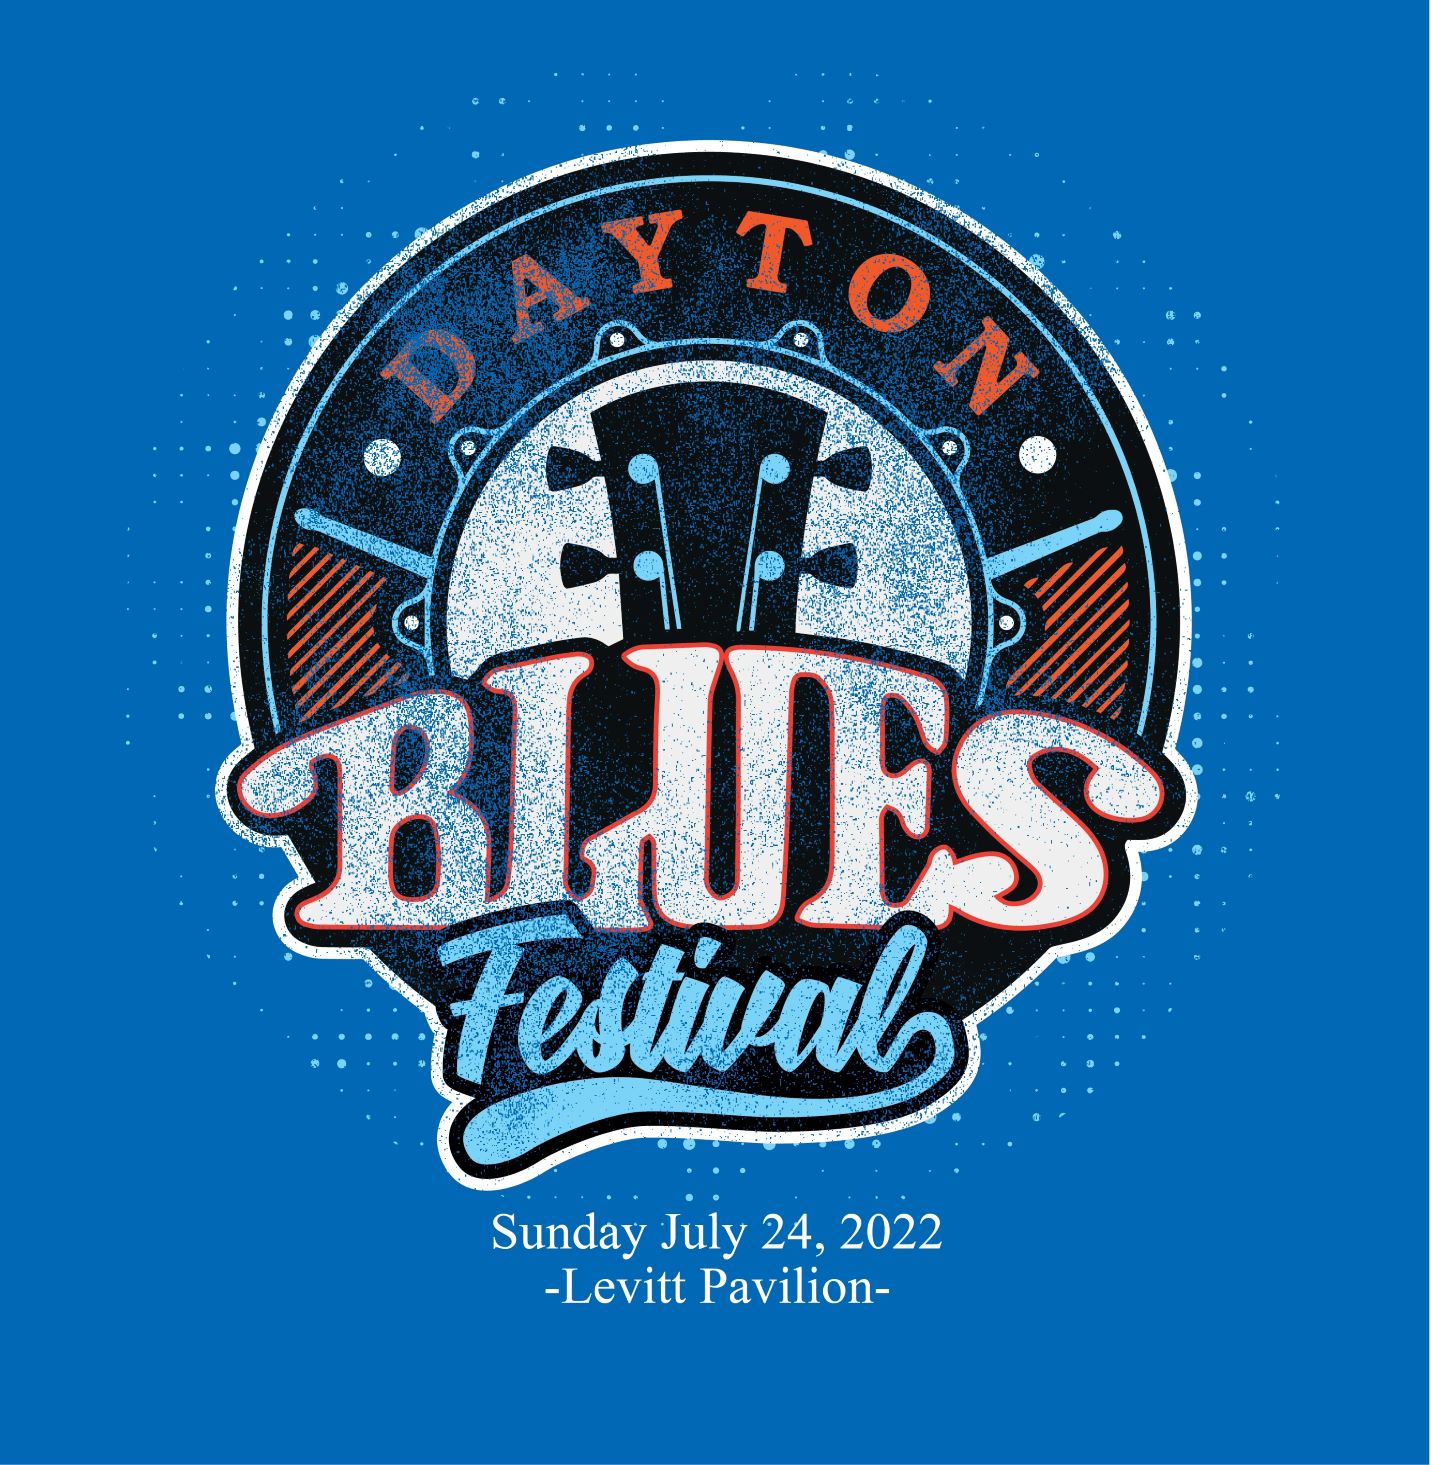 City of Dayton Blues Festival feature image